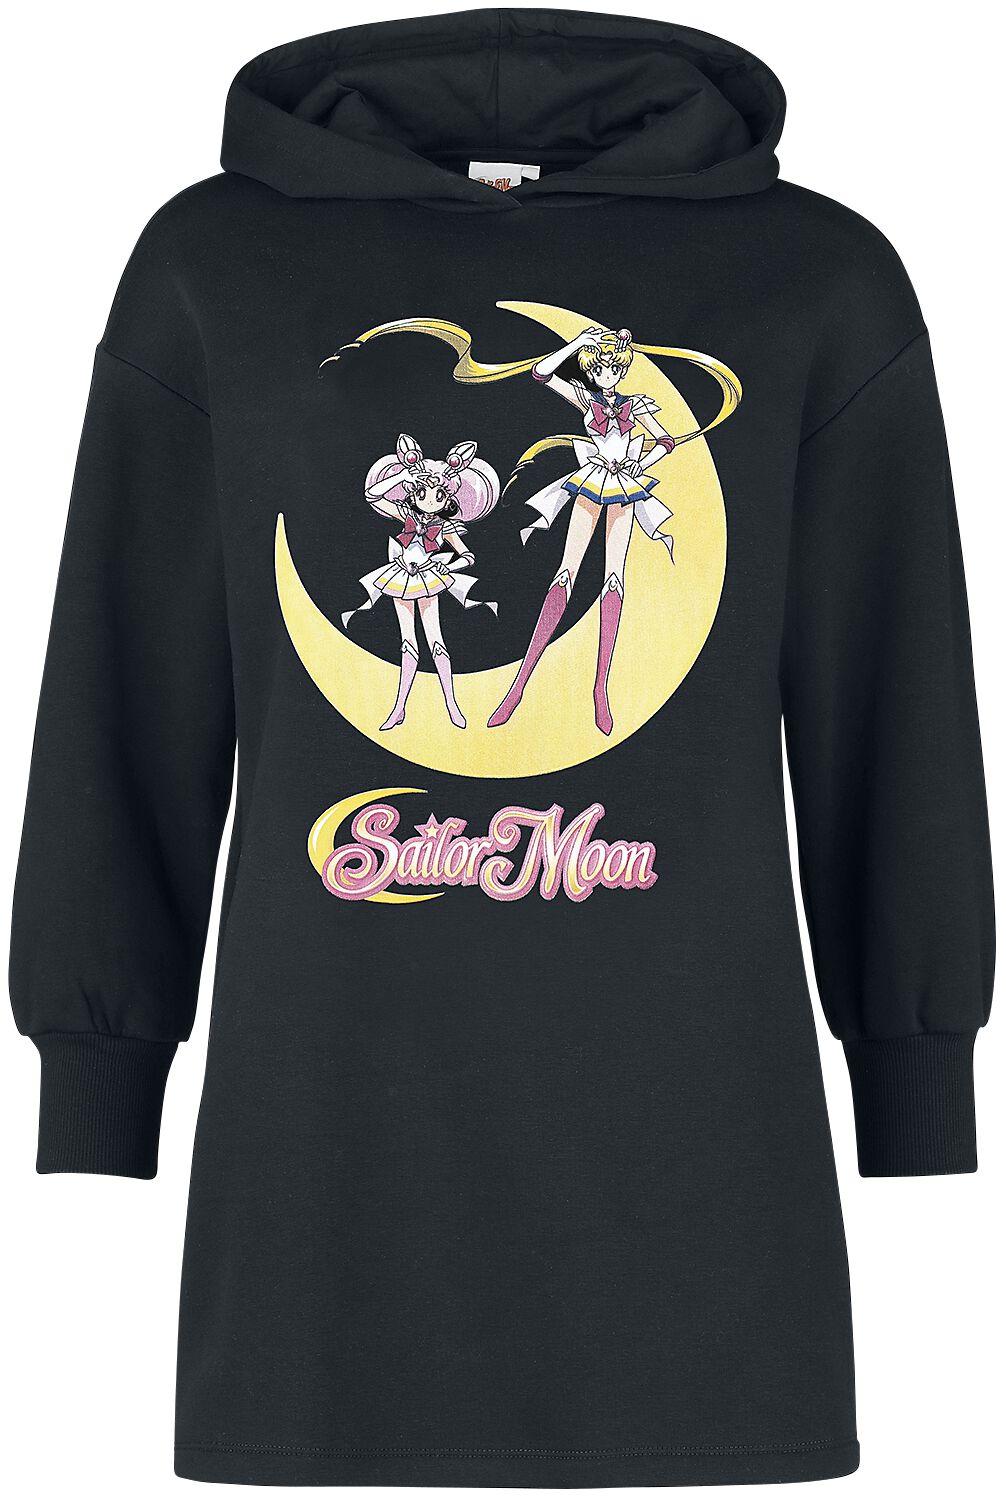 Sailor Moon Queen Nehelenia Hooded sweater black